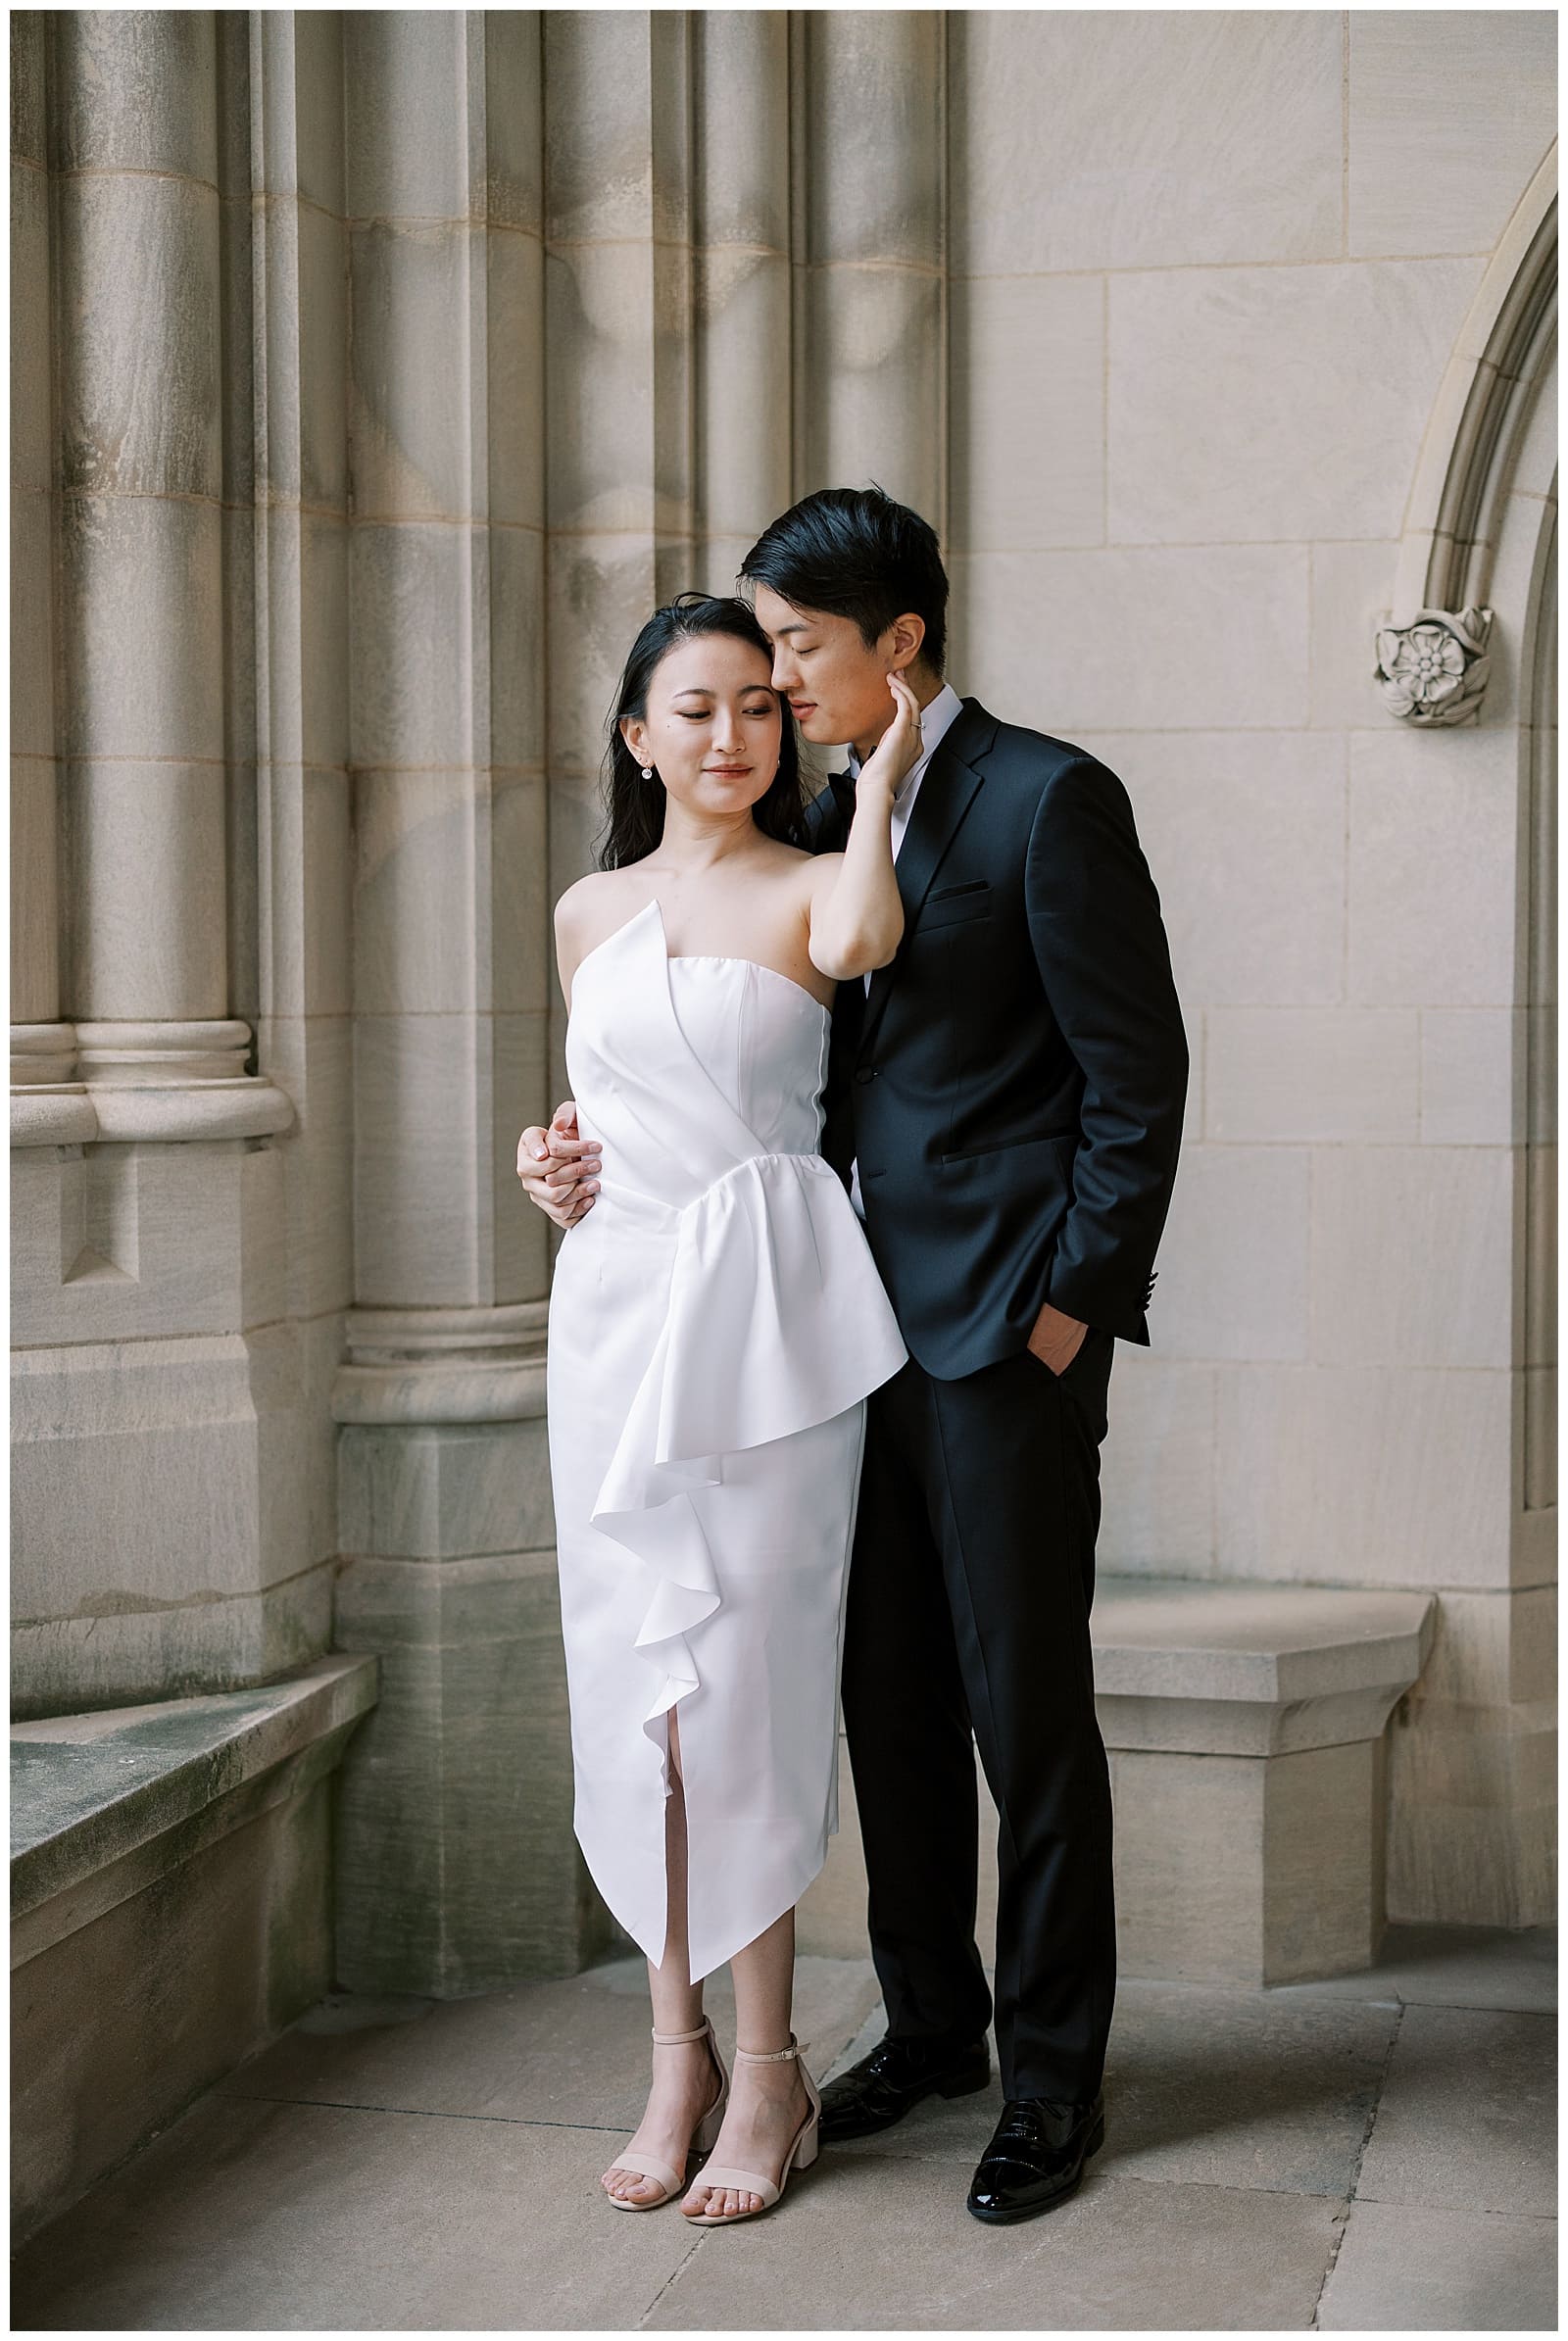 Danielle-Defayette-Photography-Washington-National-Cathedral-Engagement-Photos_0009.jpg